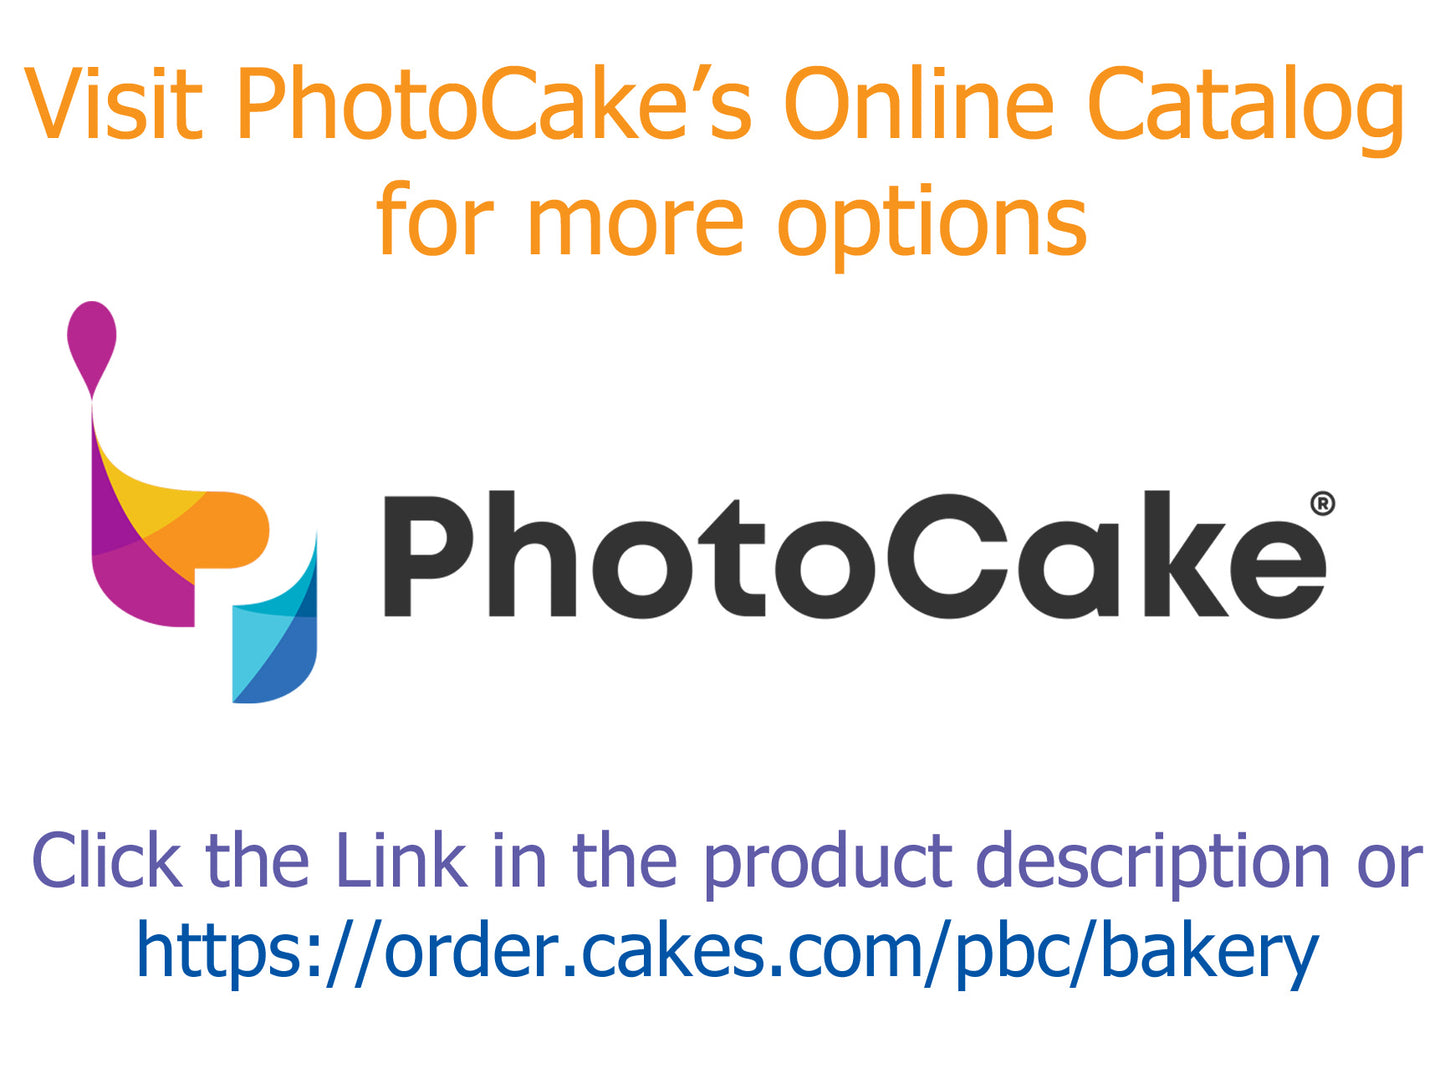 https://order.cakes.com/pbc/bakery